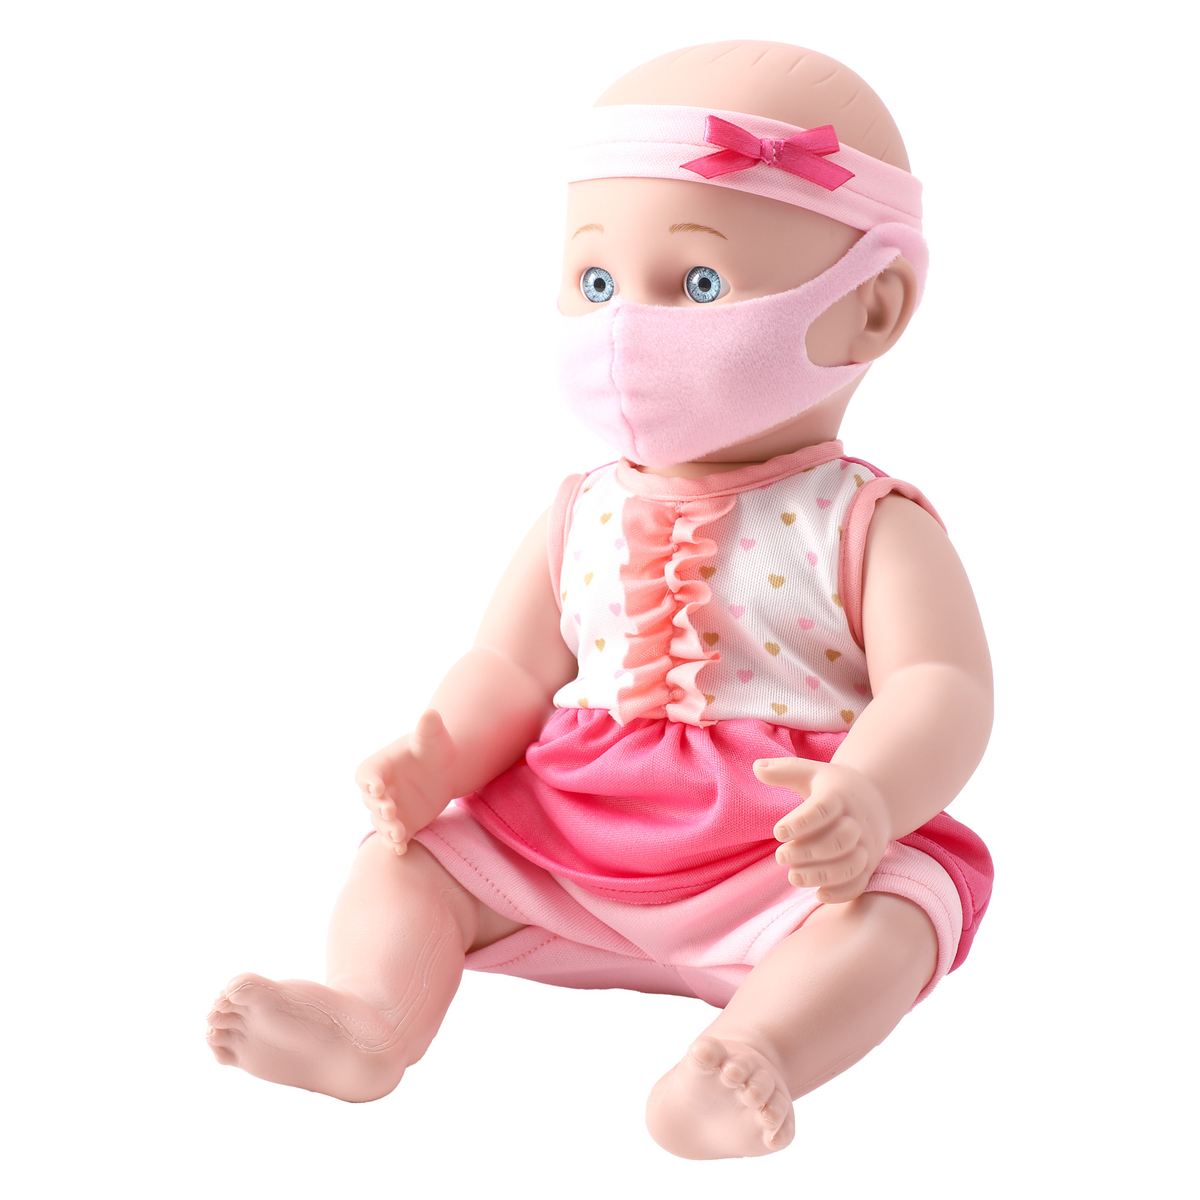 Baby Habibi Baby Doll, 14 inches, BH-697913